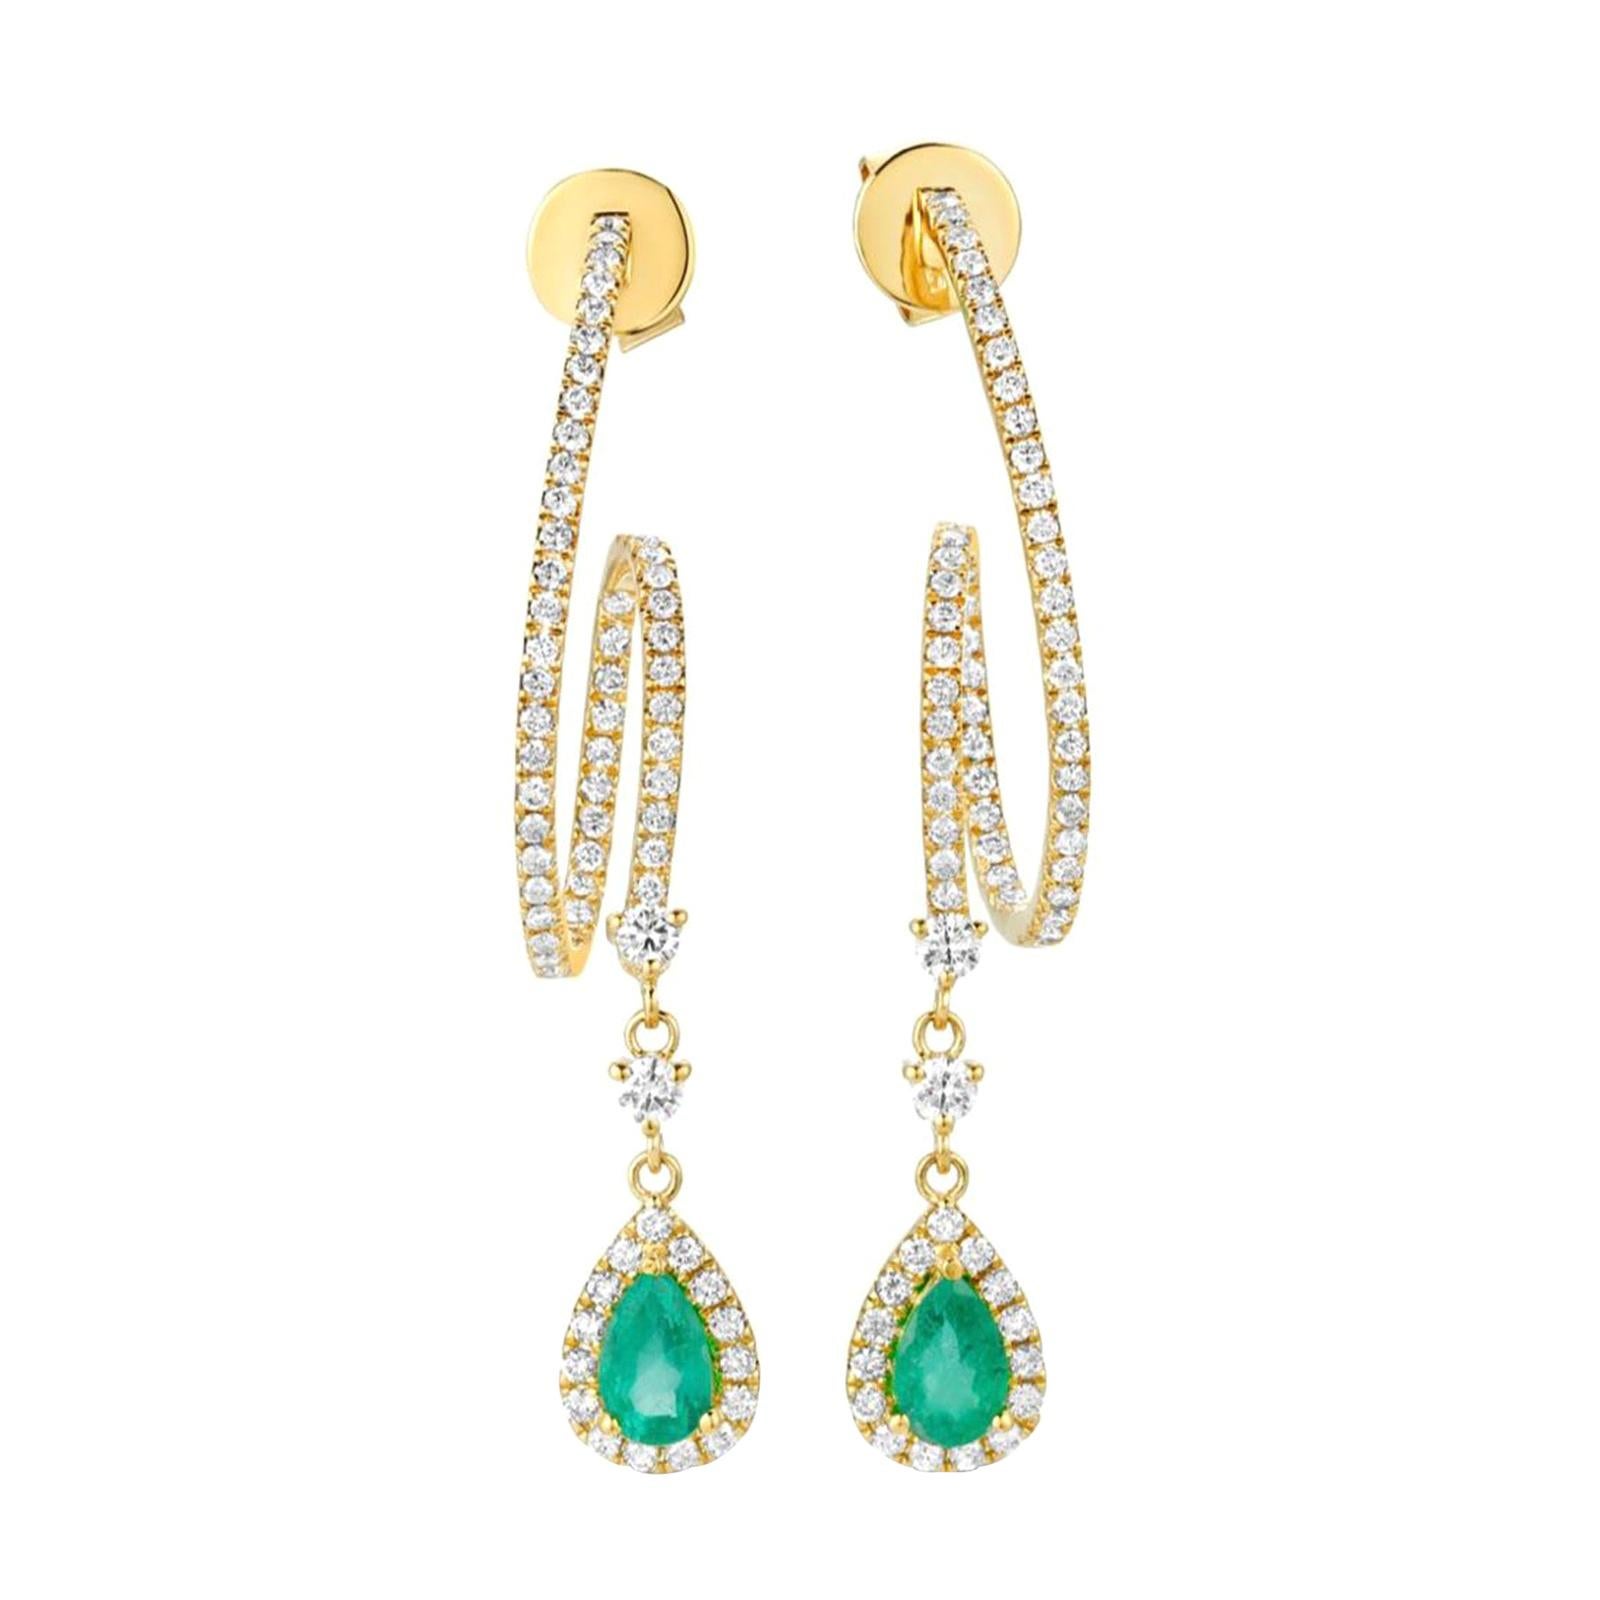 1.02 Ct Colombian Emerald & 1.04 Ct Diamonds in 14k Yellow Gold Drop Earrings For Sale